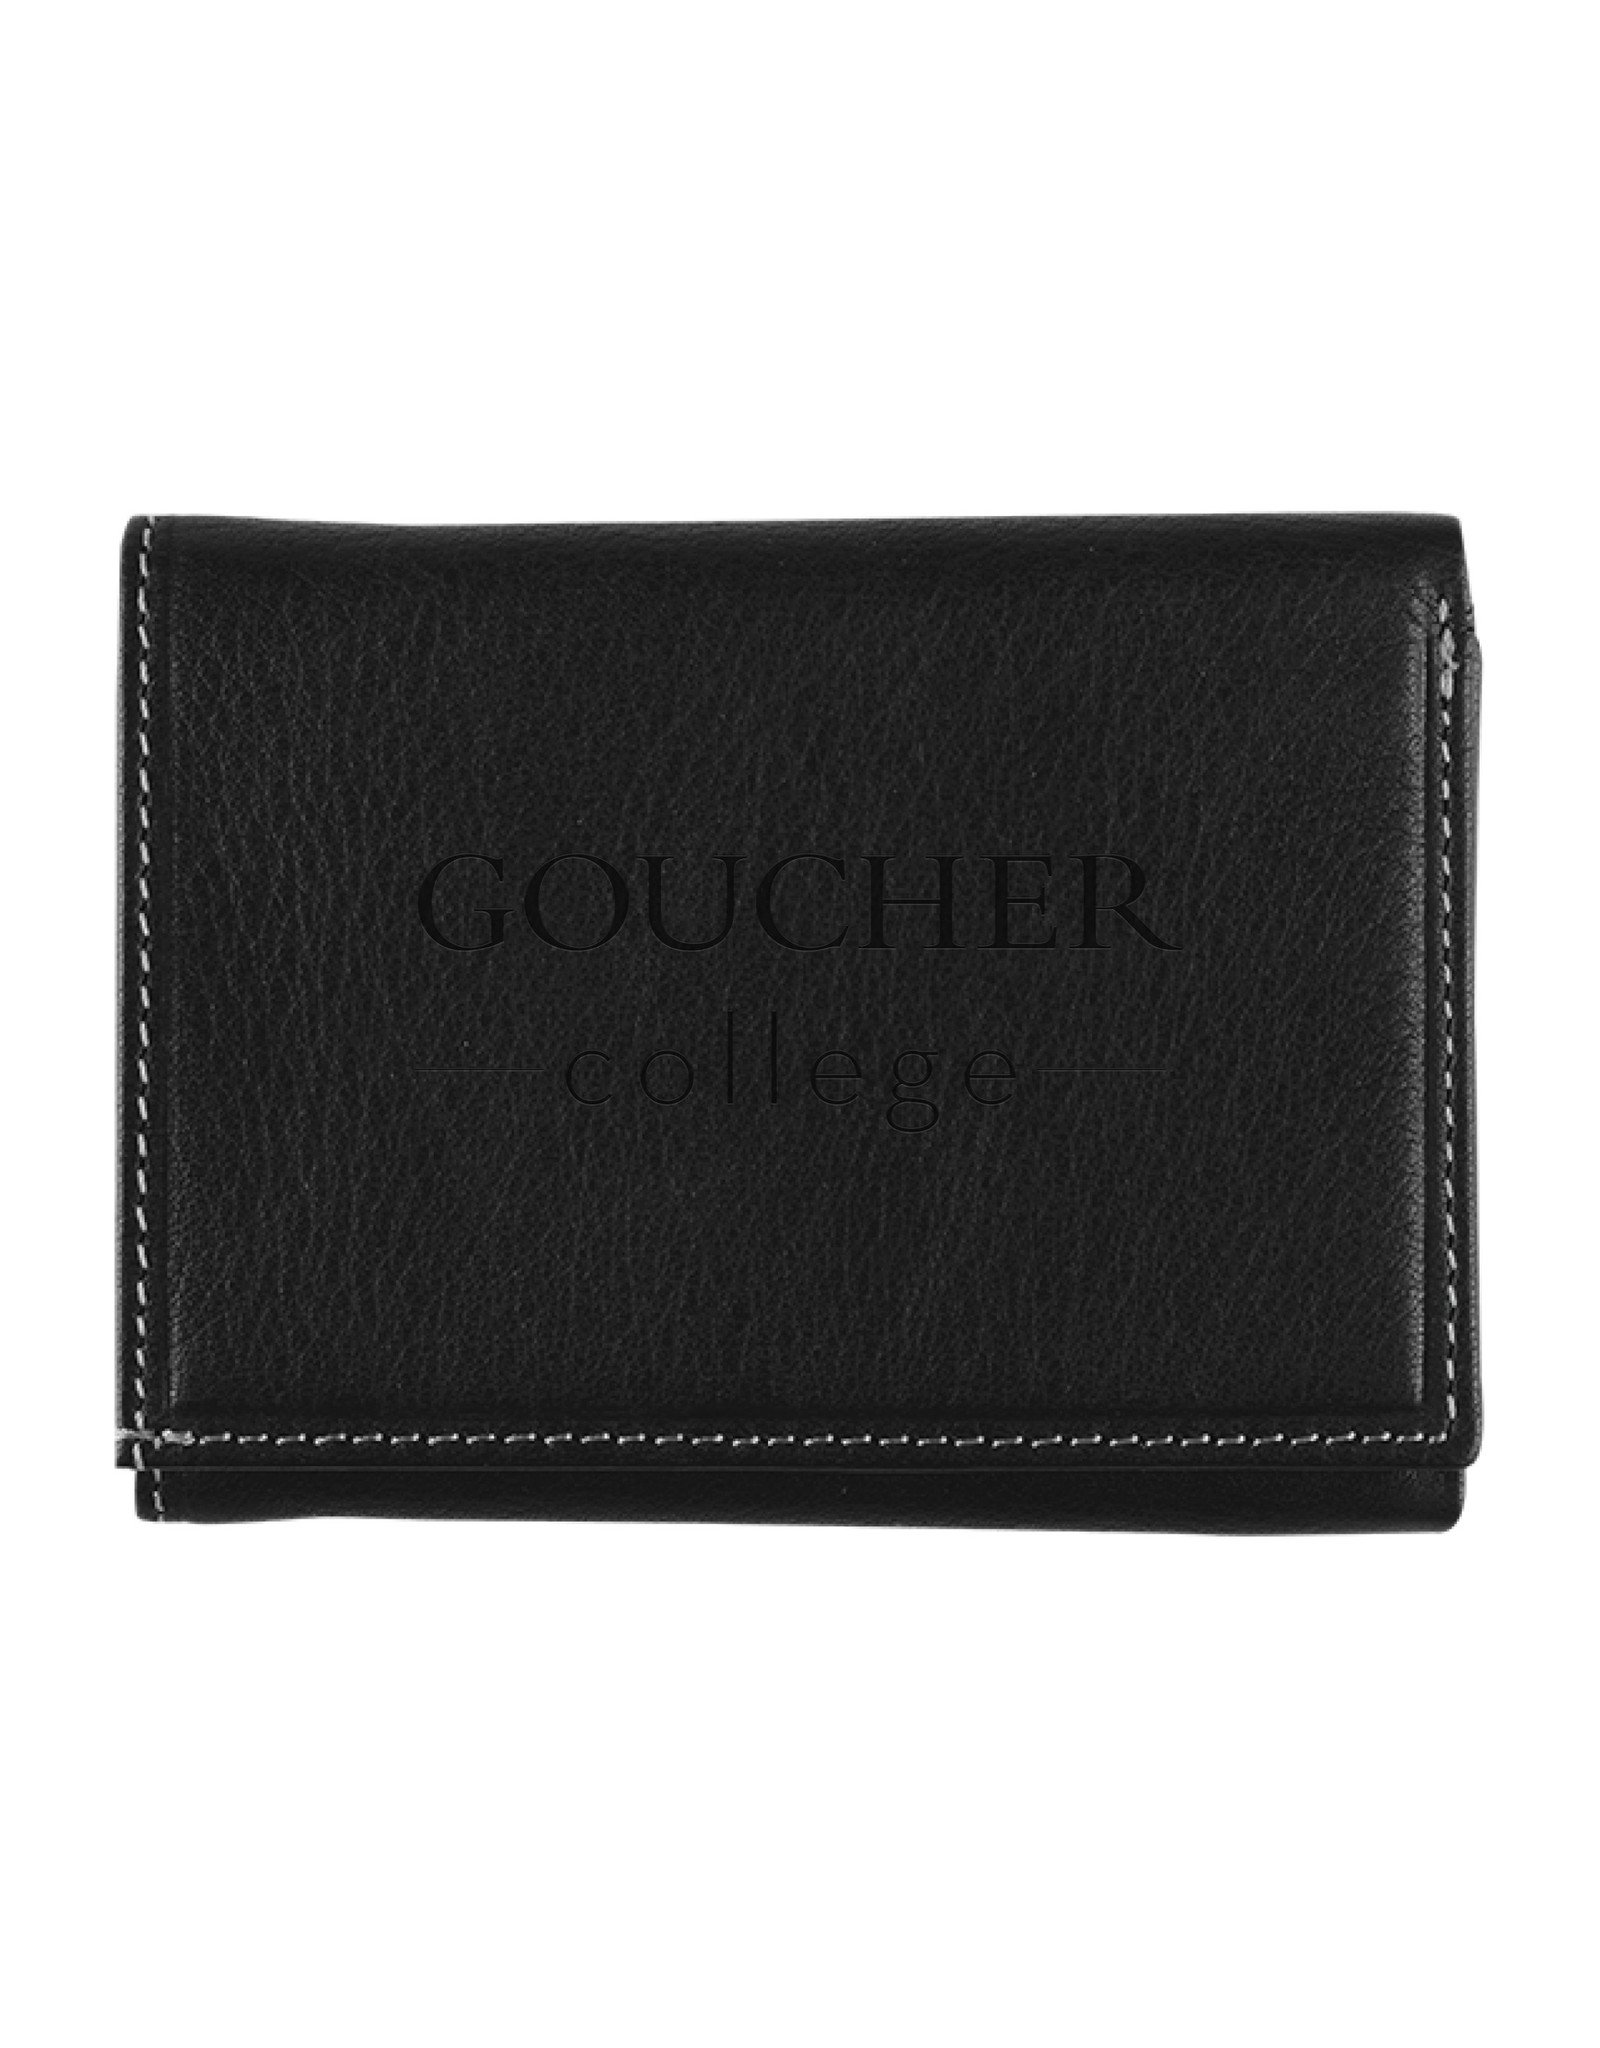 Jardine Antique Leather Trifold Wallet "Goucher College"